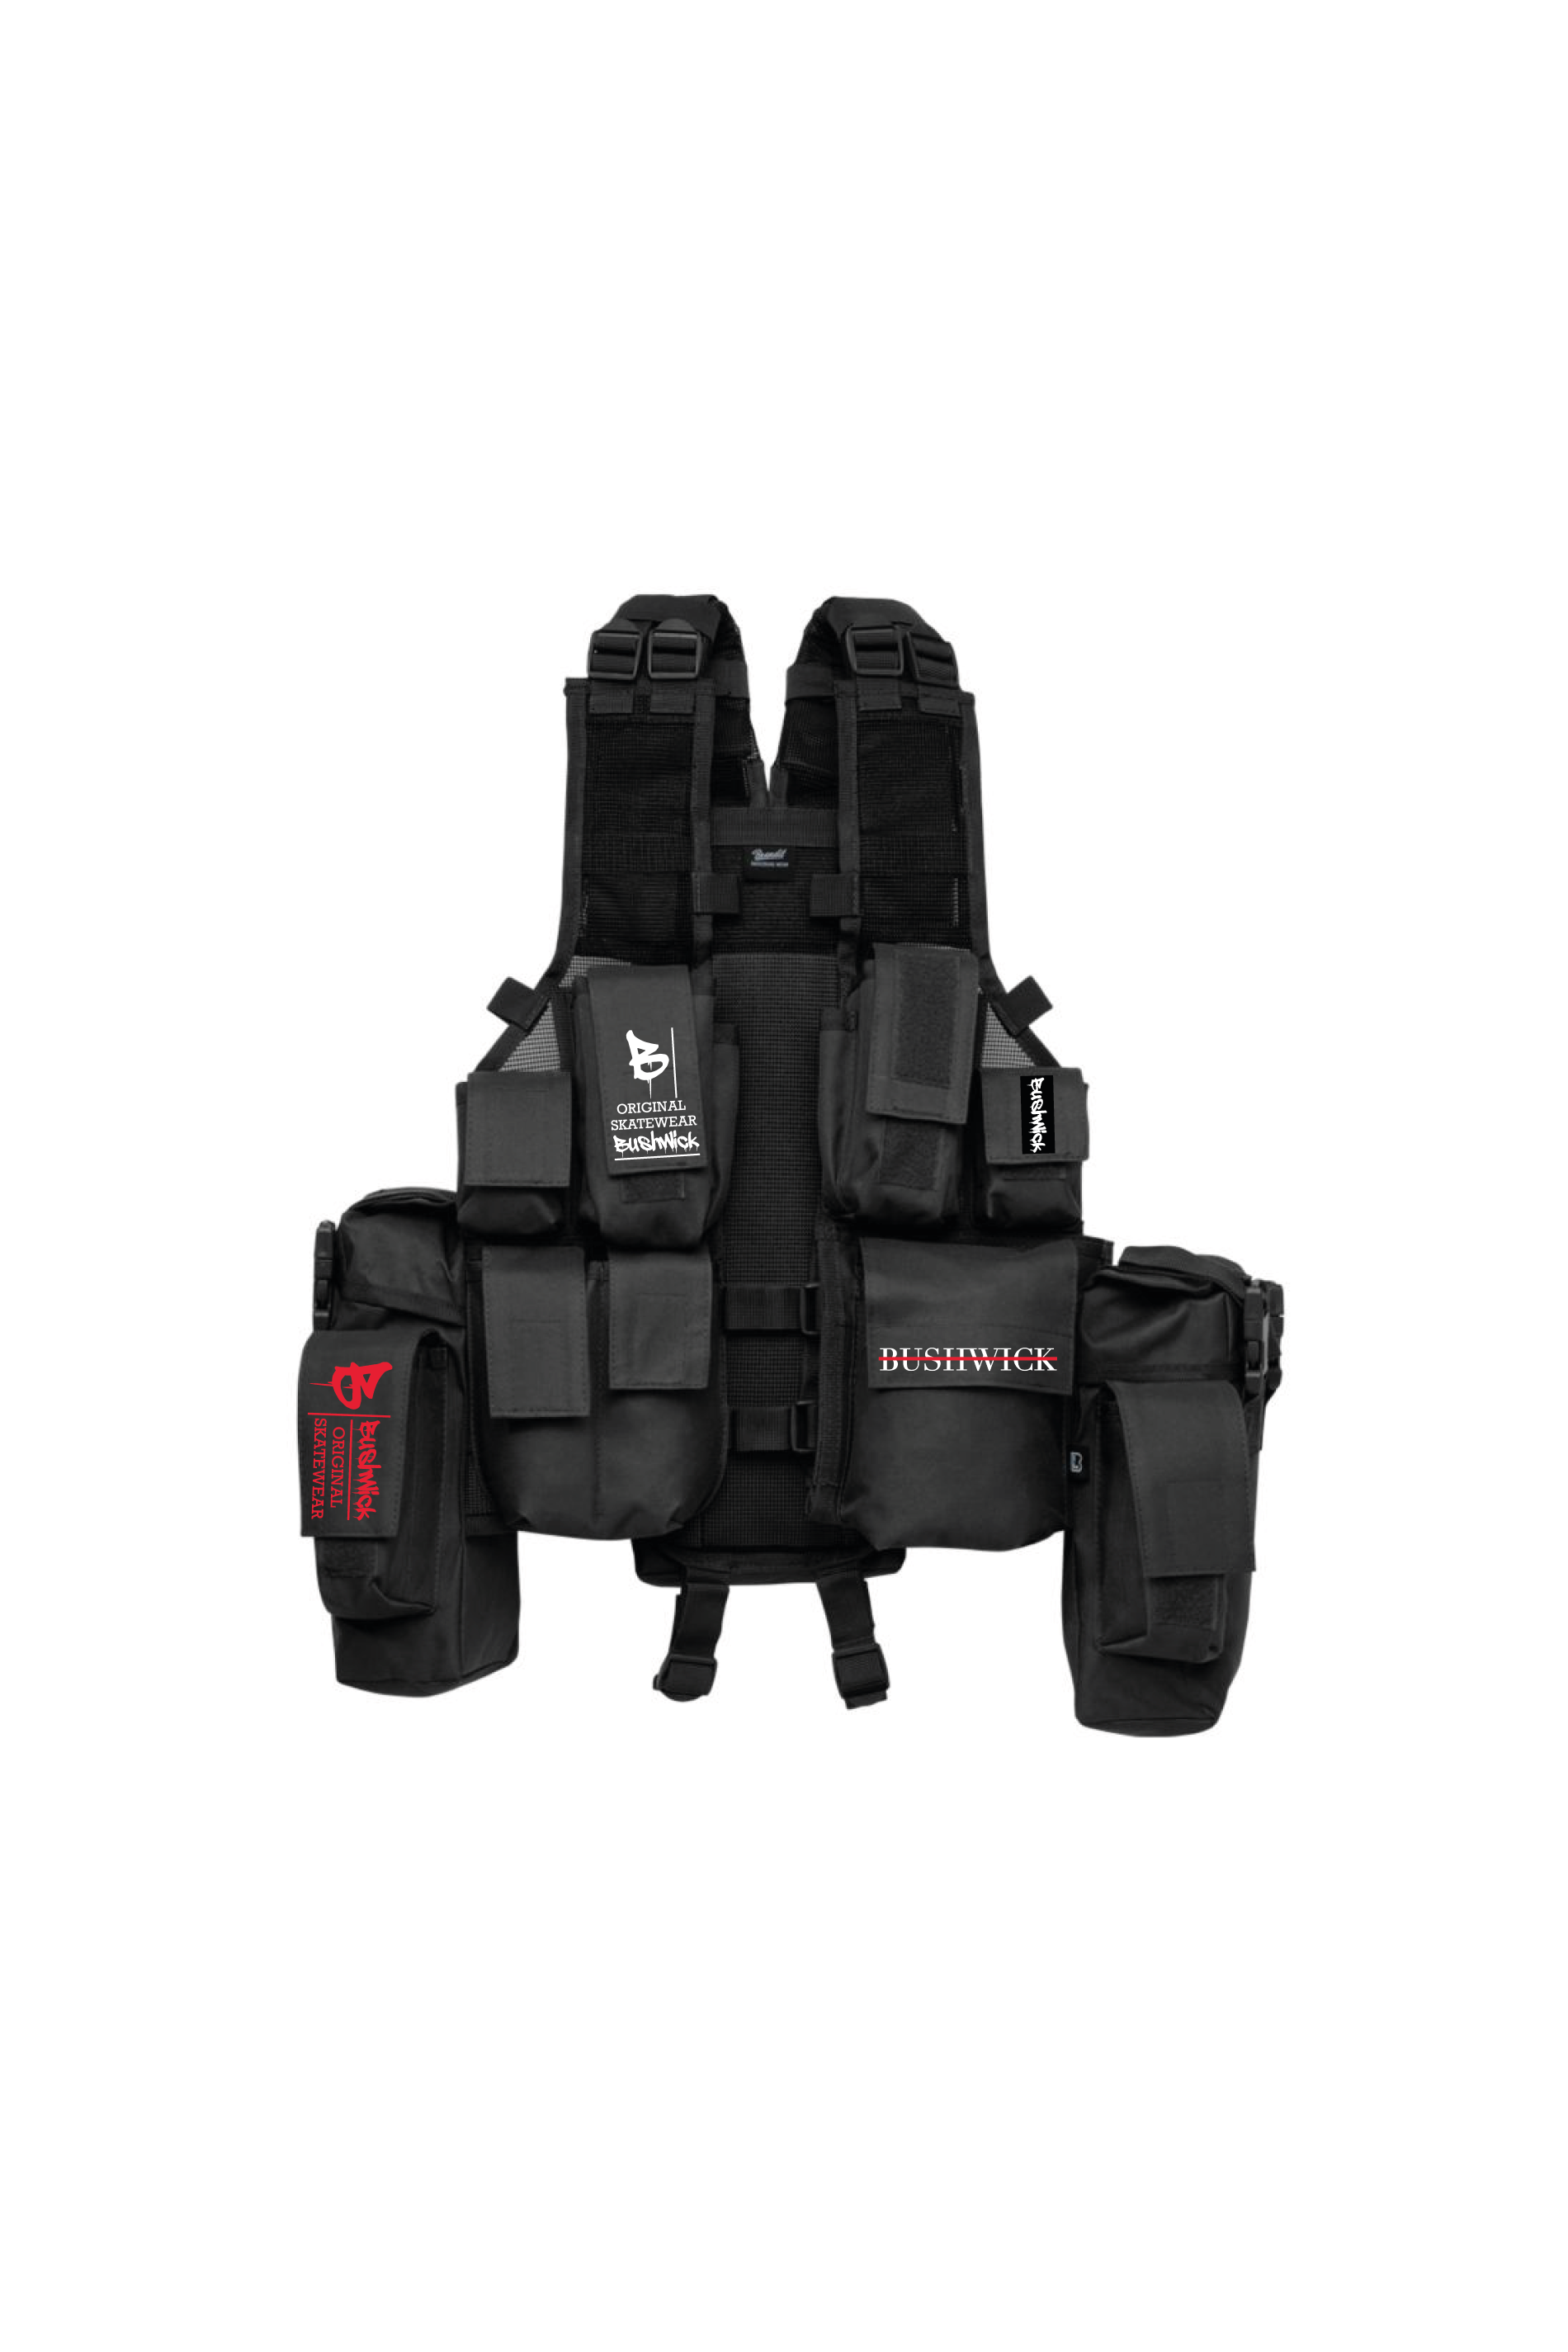 Bushwick Gilet Multitasche Tactical Vest